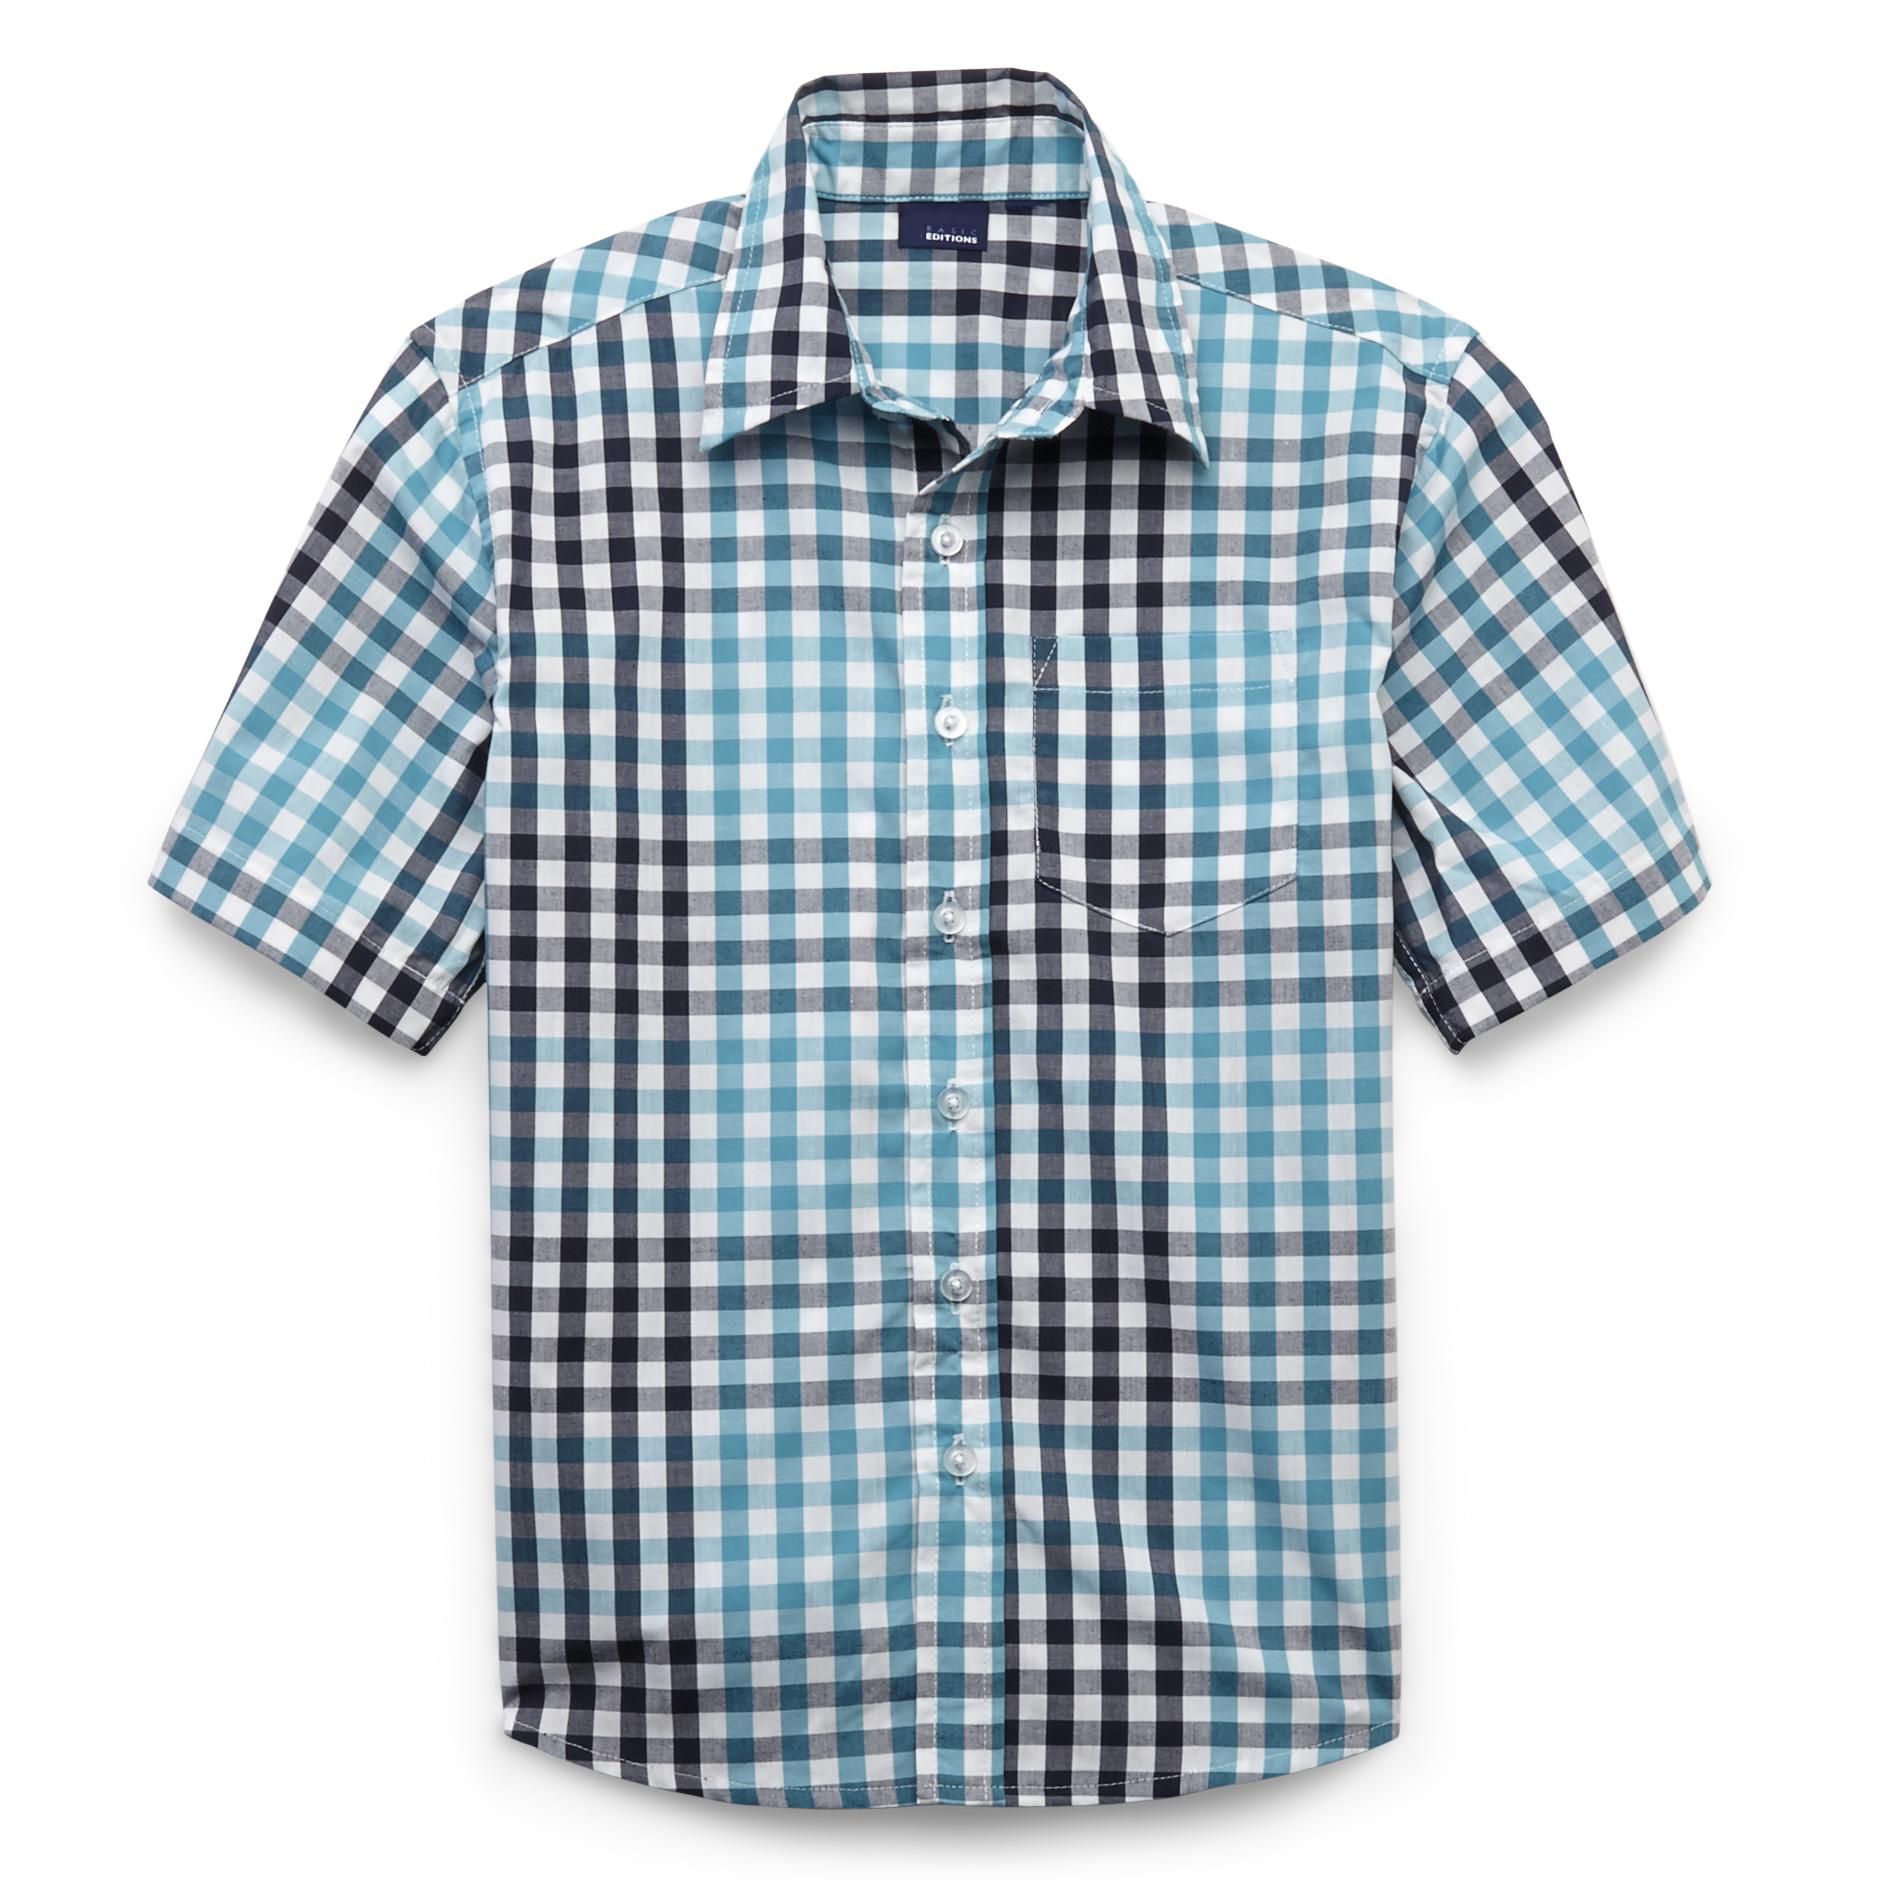 Basic Editions Boy's Short-Sleeve Dress Shirt - Checkered